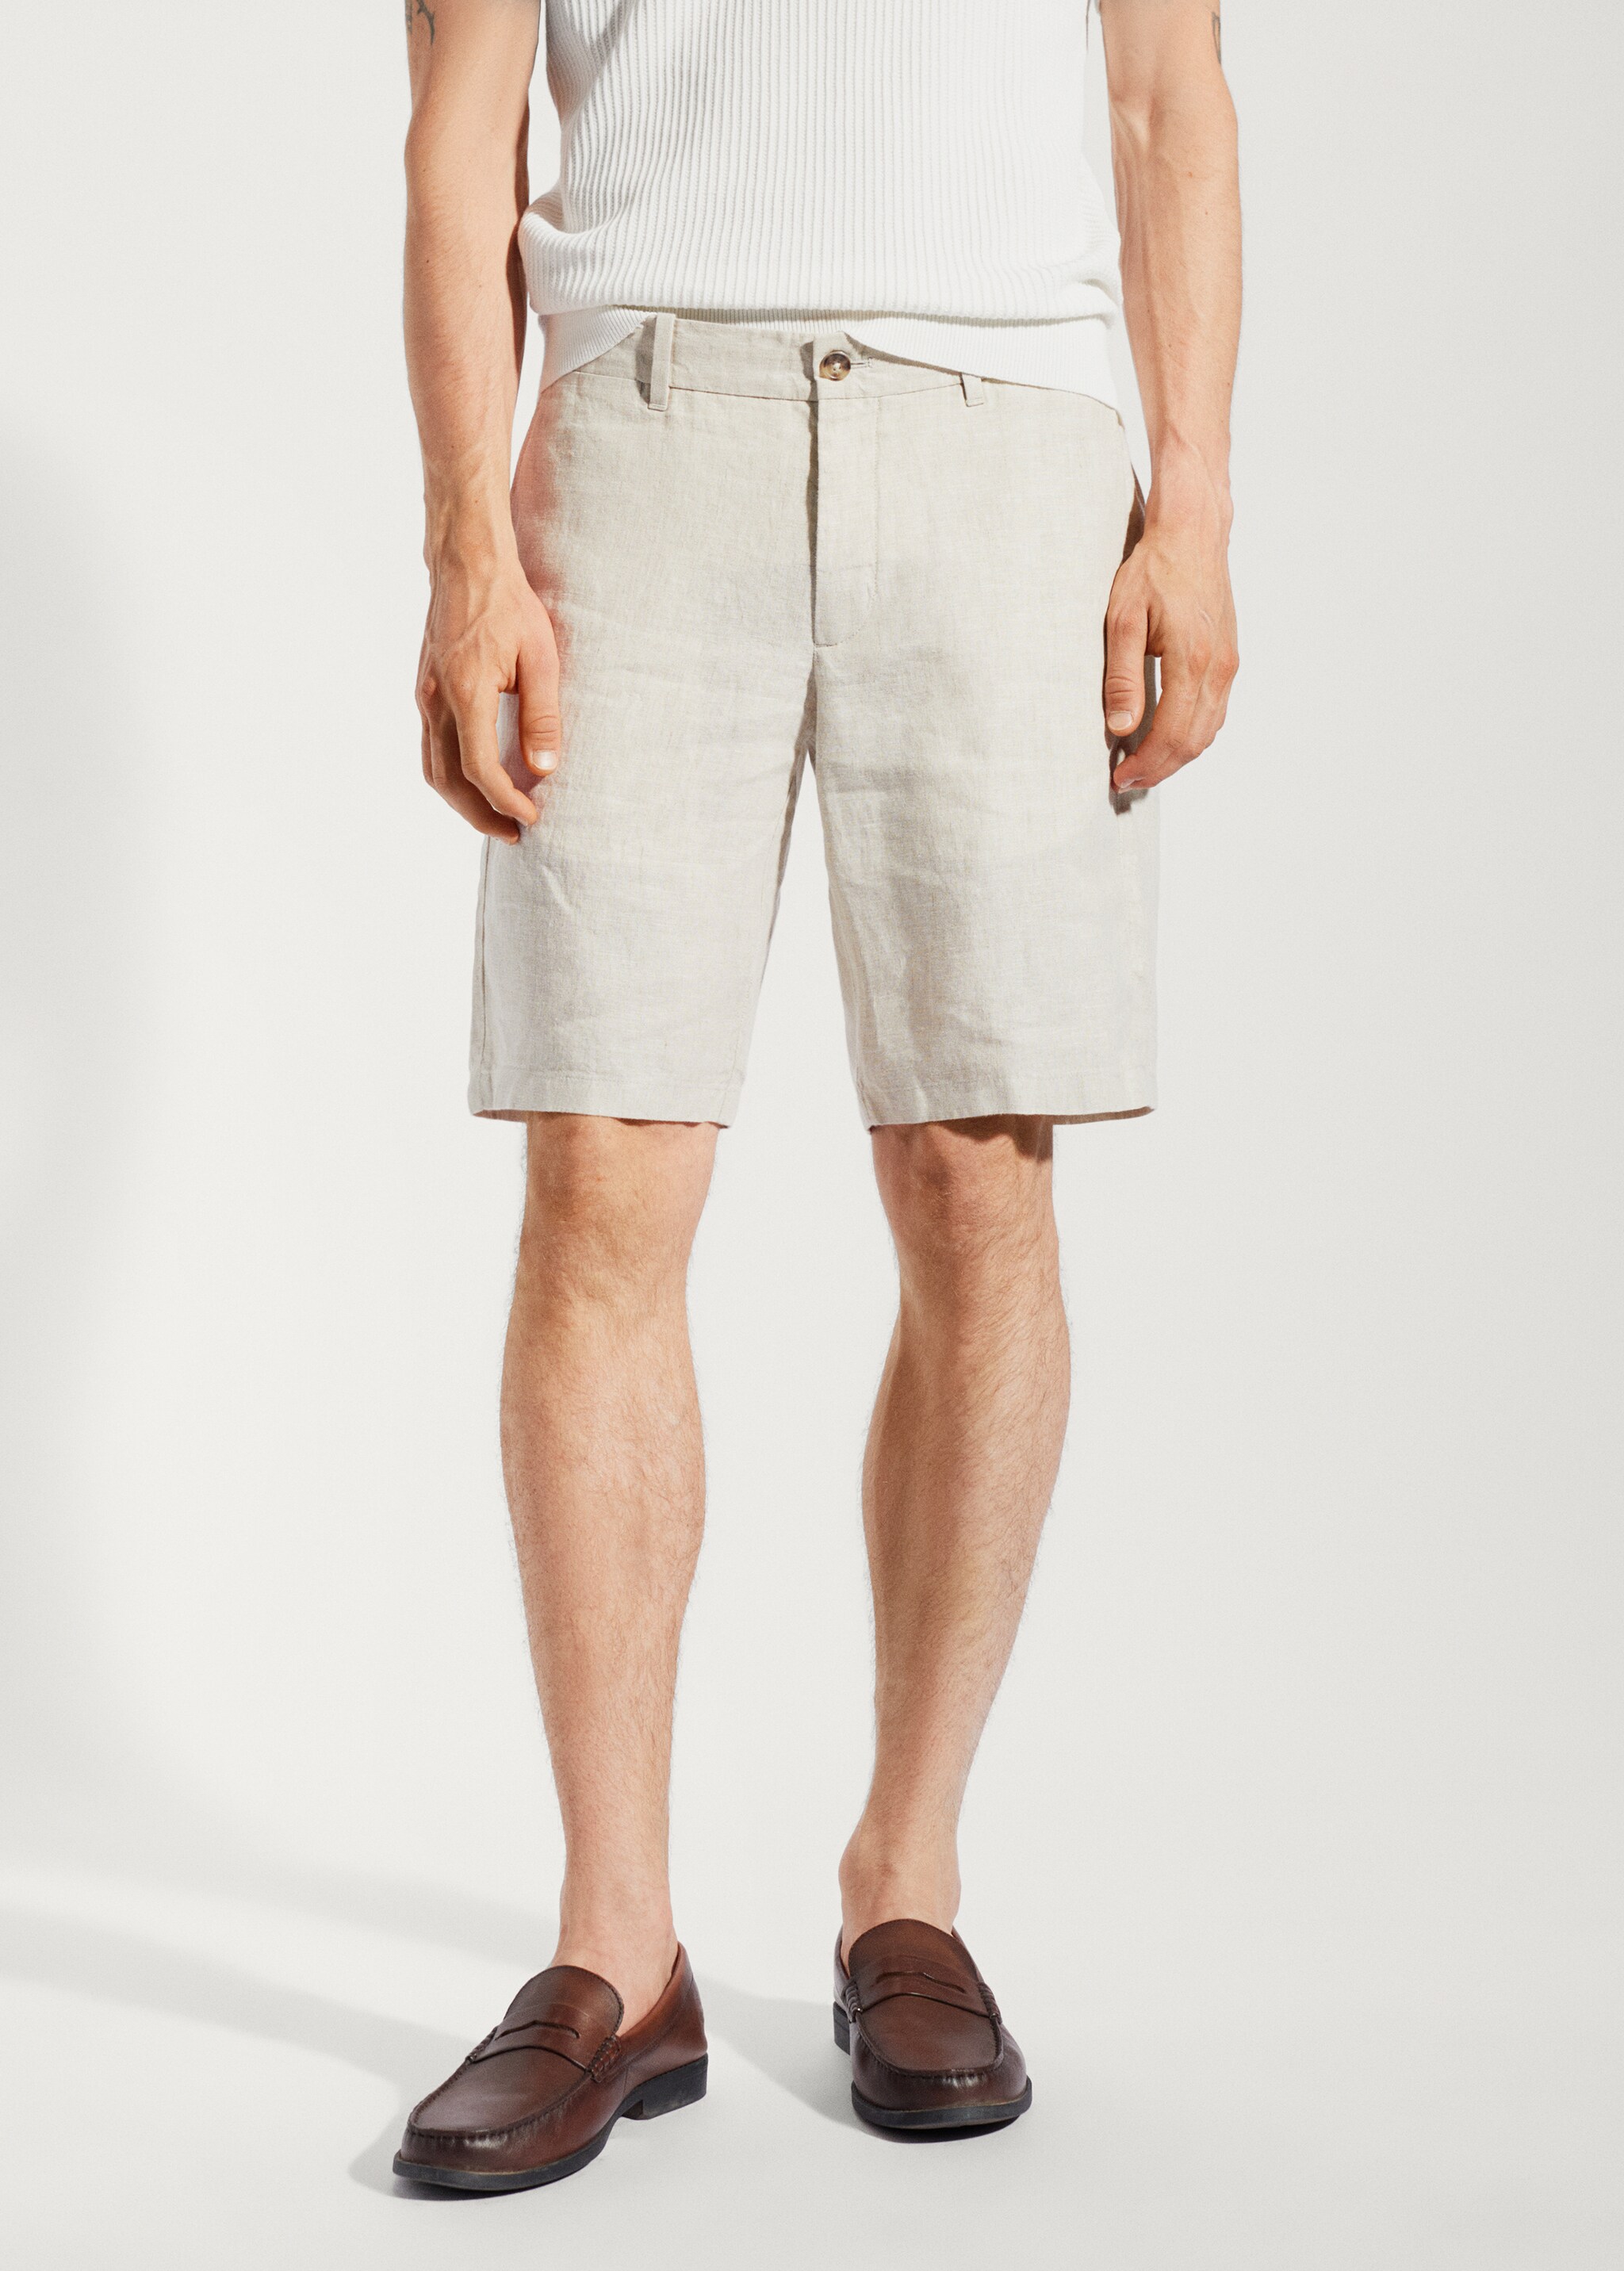 100% linen shorts - Medium plane